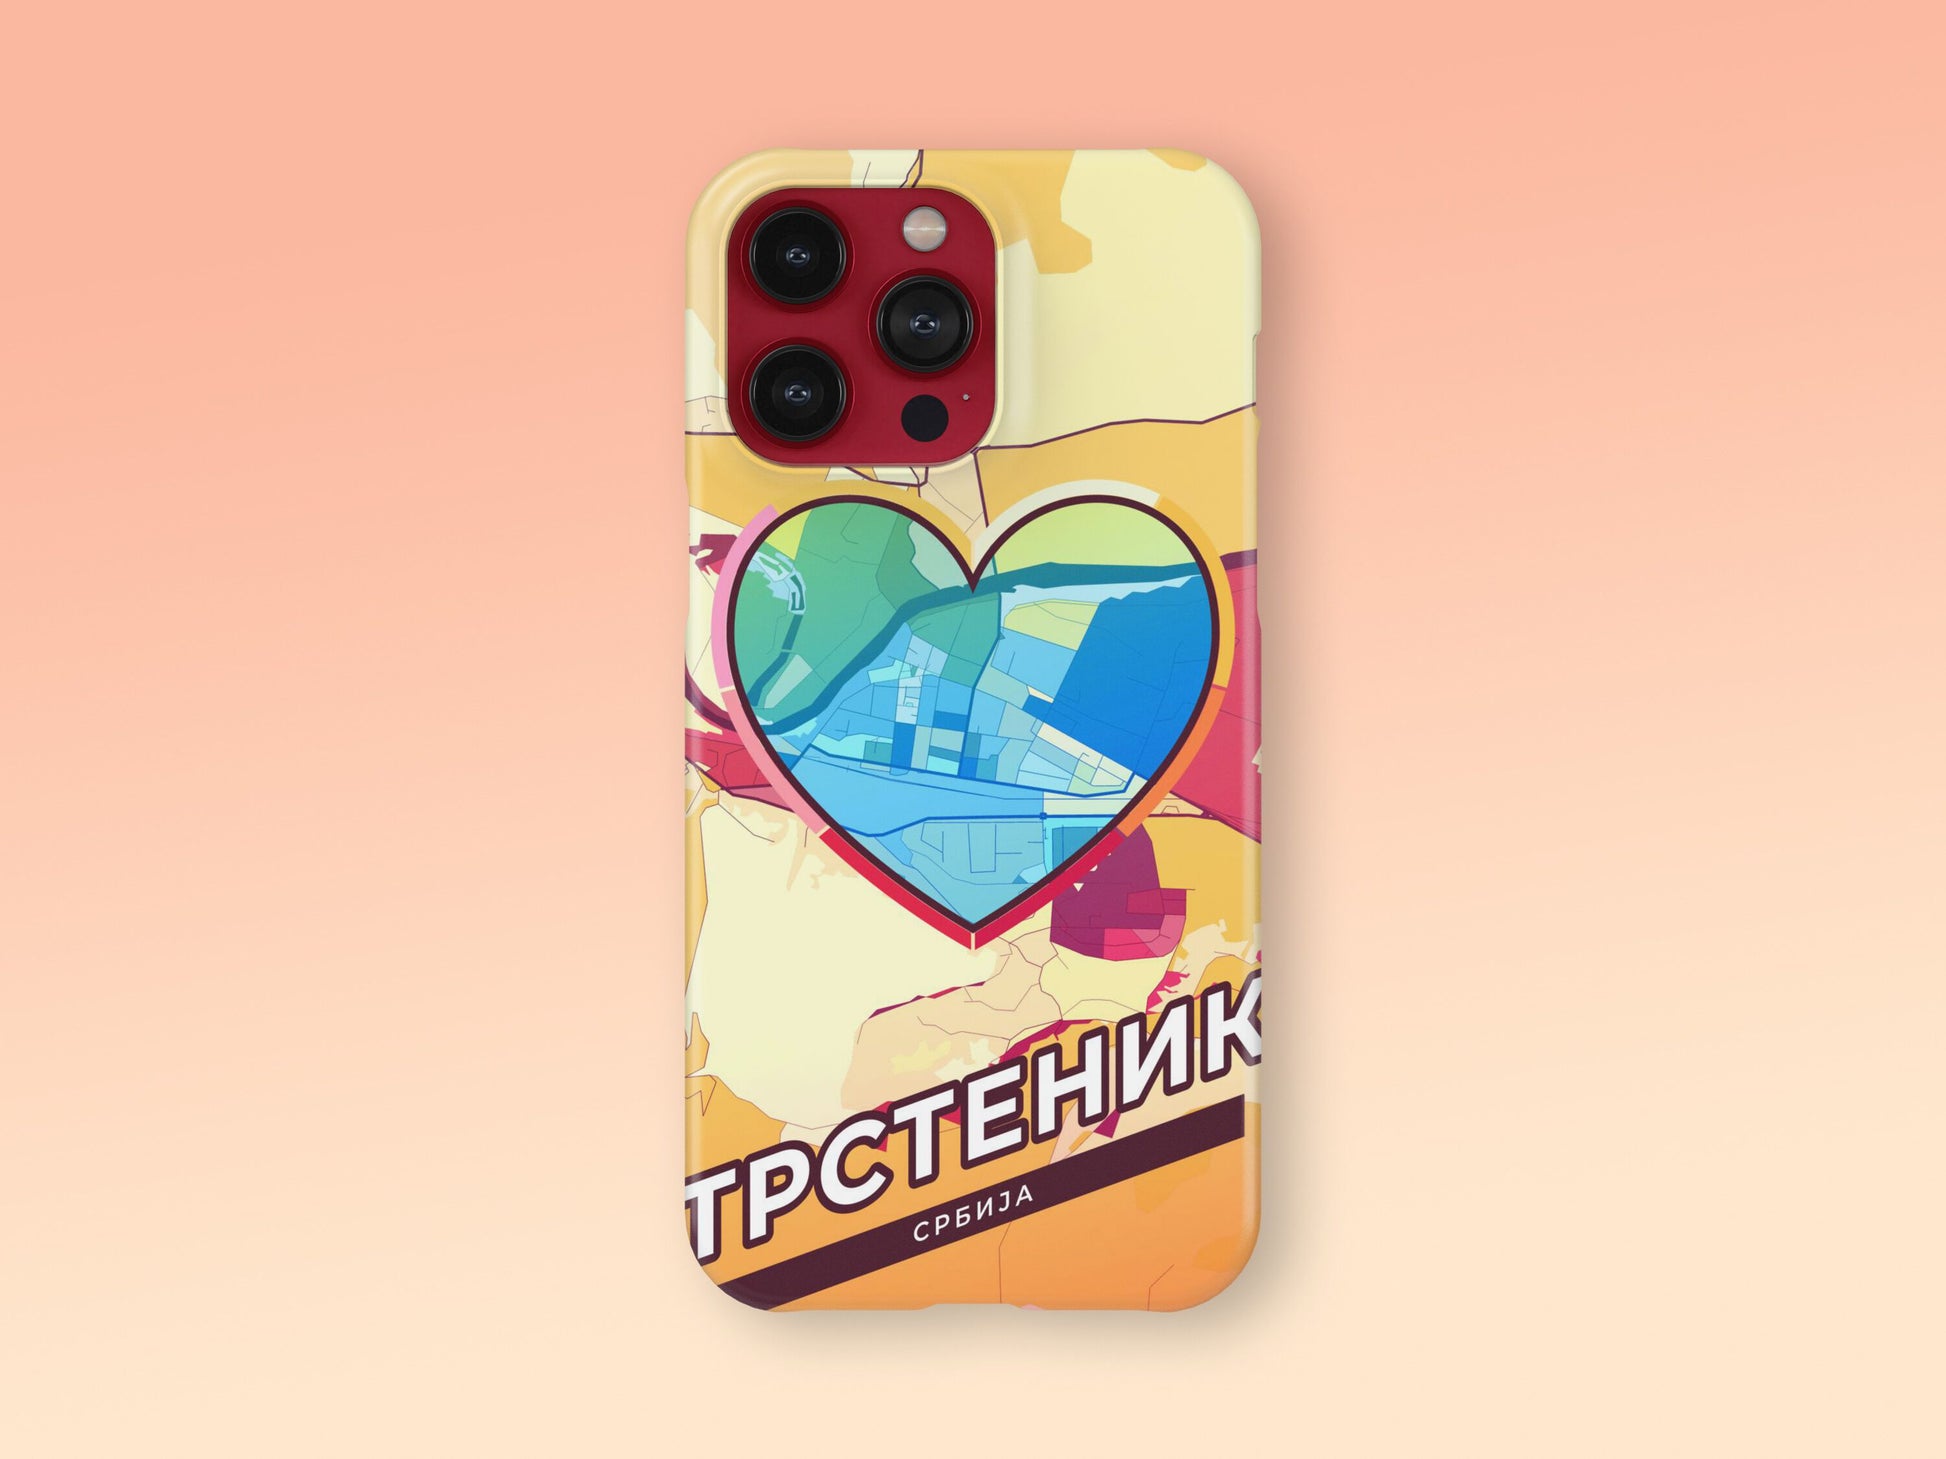 Trstenik Serbia slim phone case with colorful icon 2